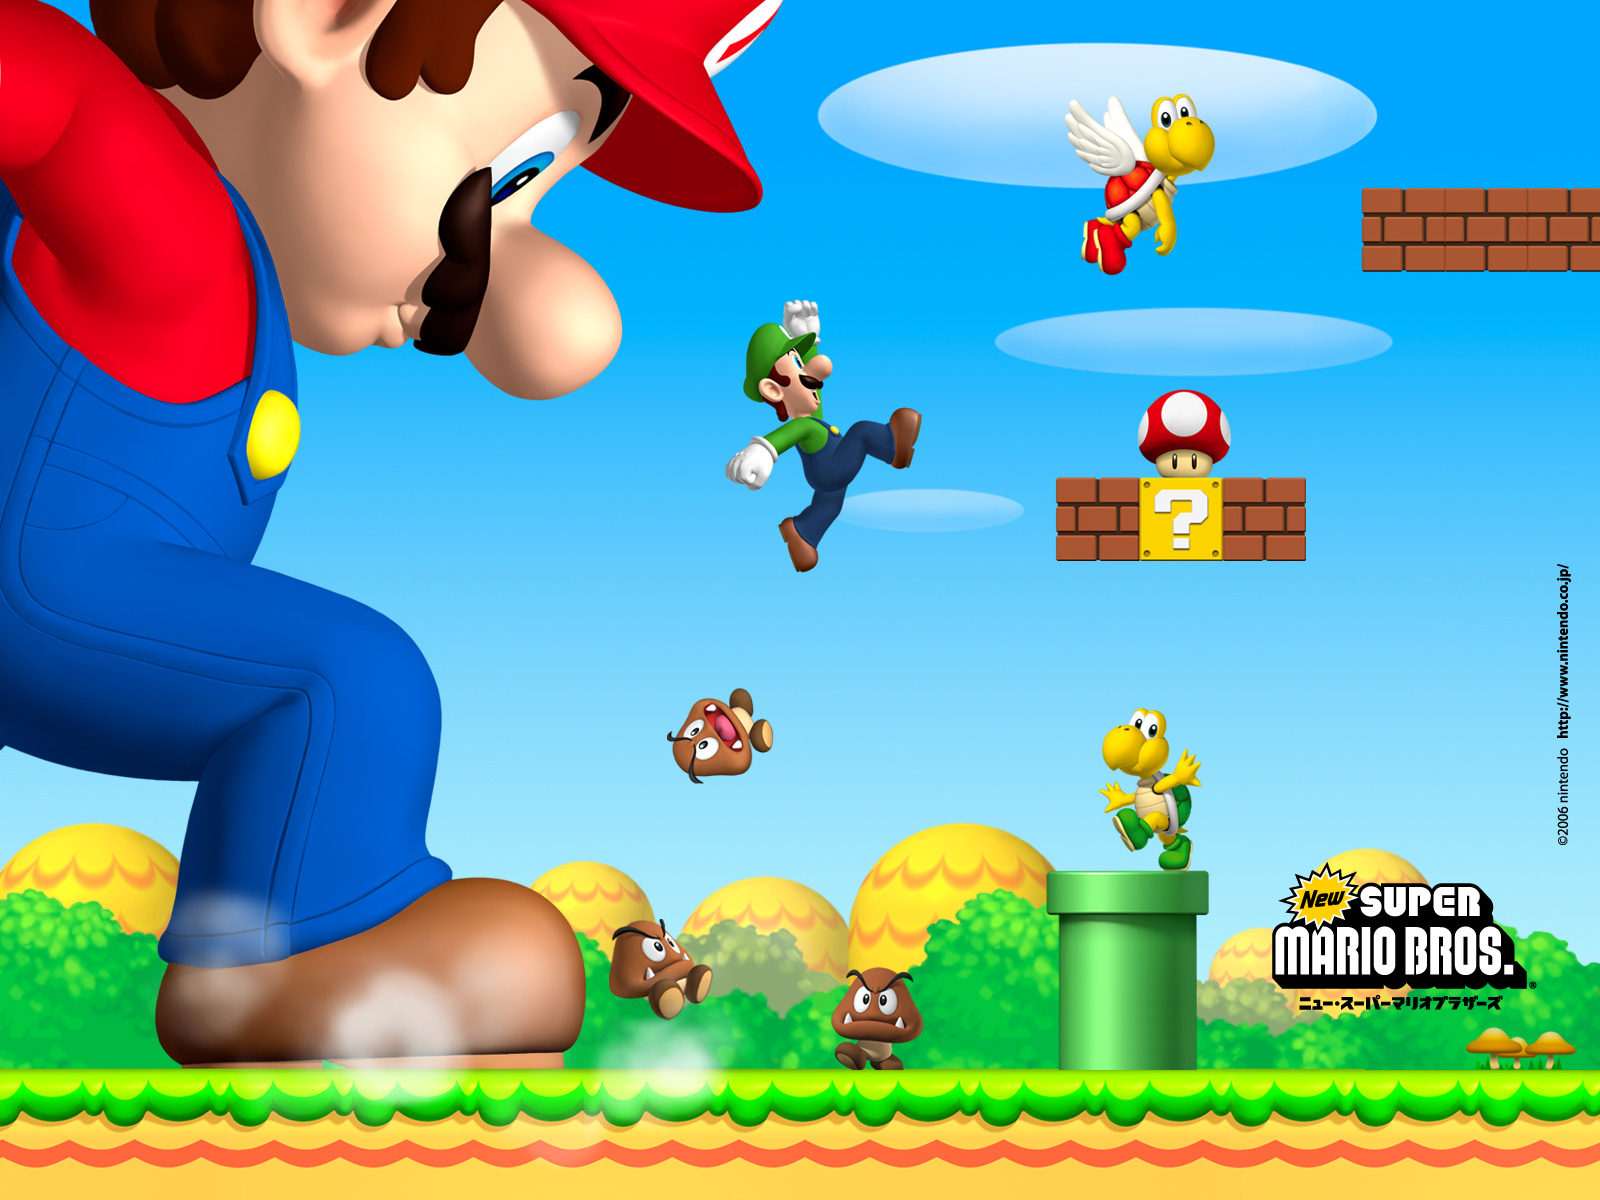 Play mario bros. New super Mario Bros. Игра. Игра Марио супер Марио БРОС. Супер Марио БРОС Нинтендо. Игры New super Mario Bros u.